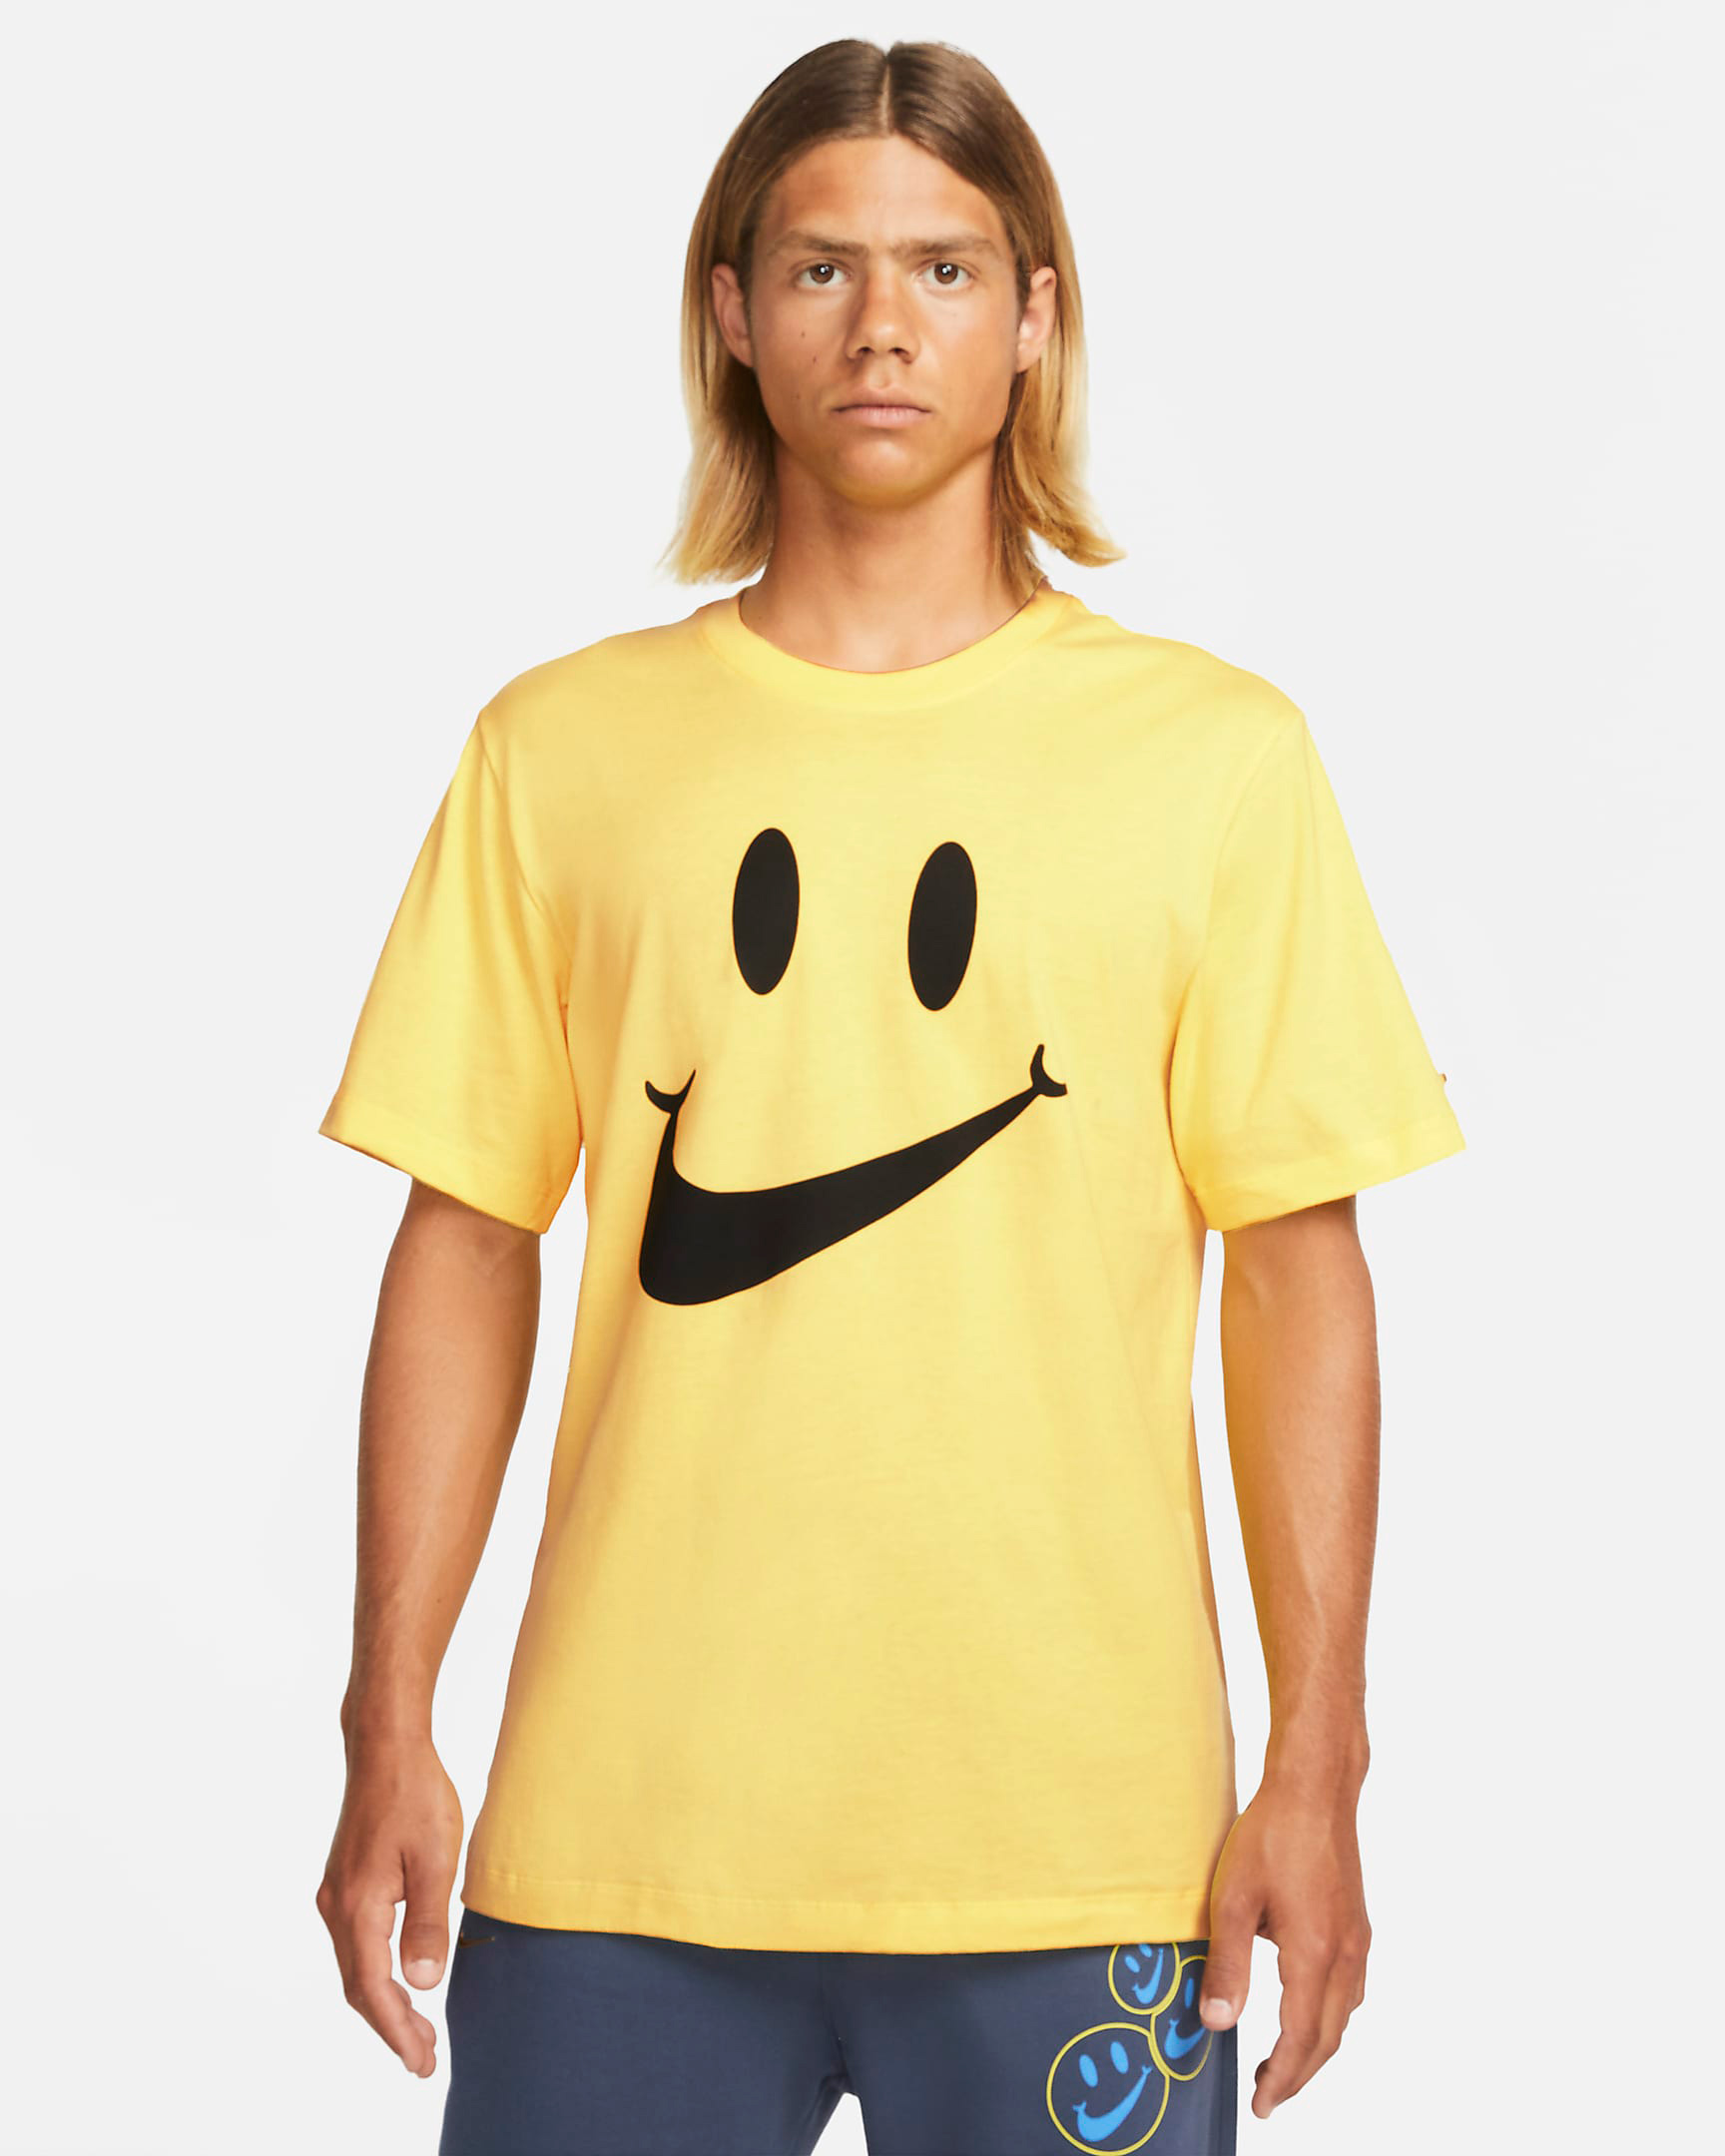 nike-go-the-extra-smile-shirt-yellow-black-1